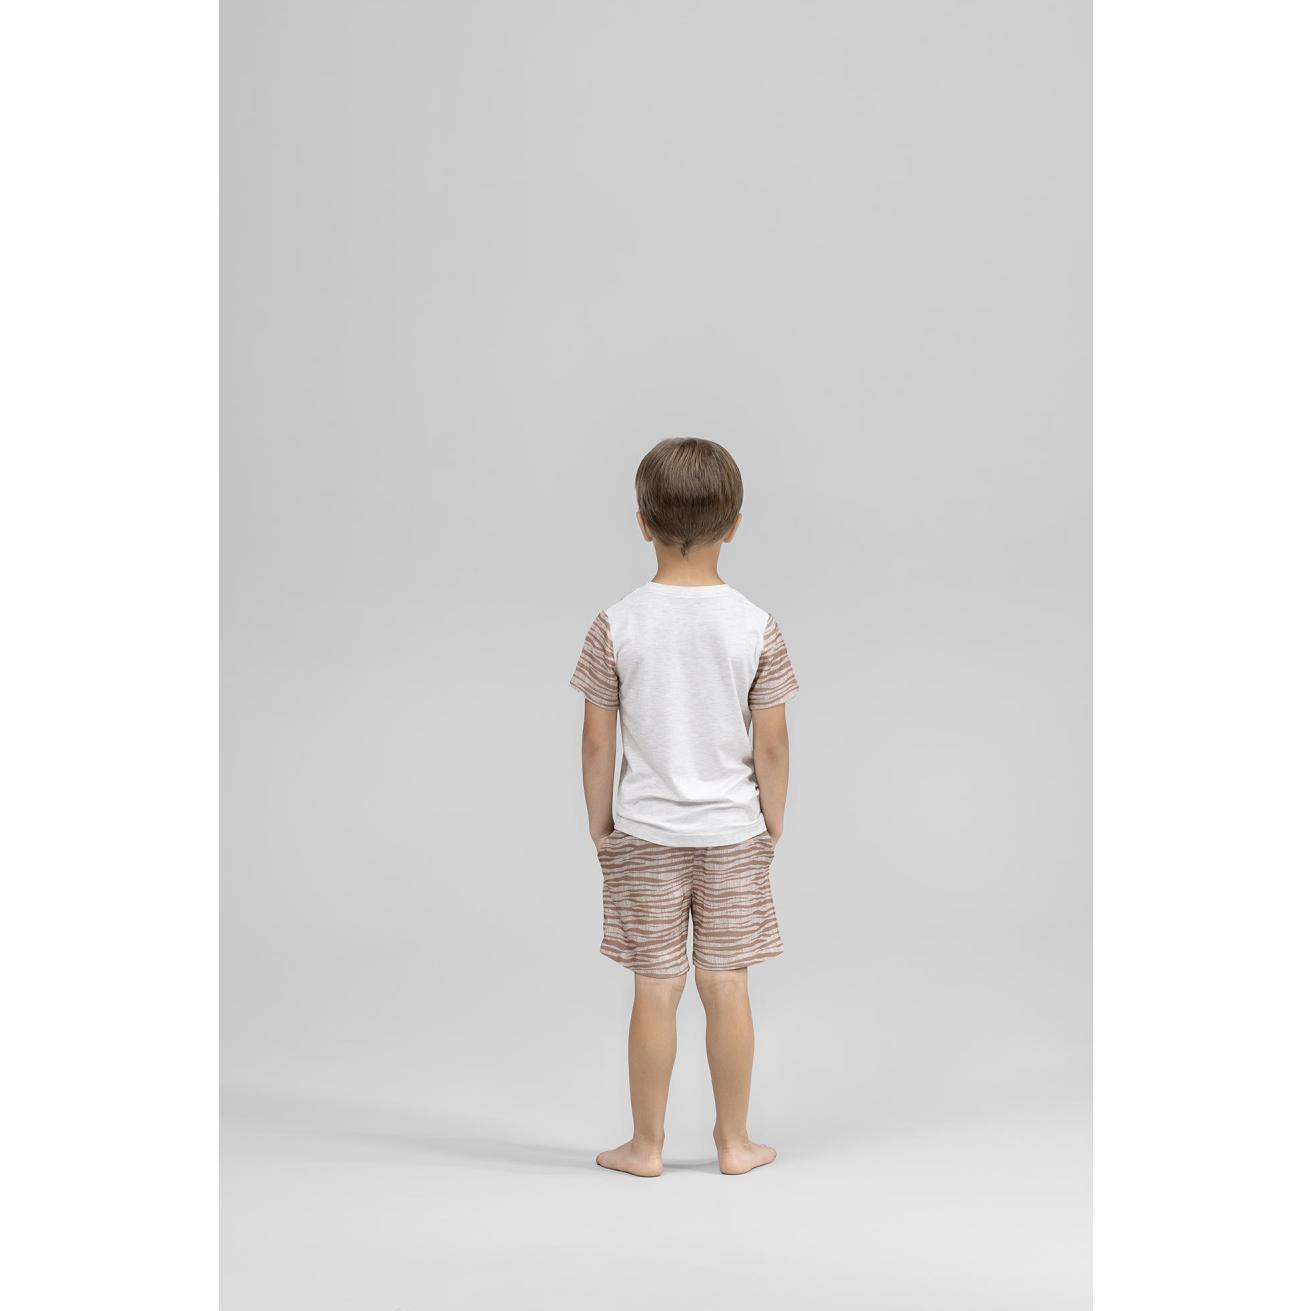 Пижама для мальчиков Kids by togas Сафари бежевый 92-98 см, размер 92-98 см - фото 5